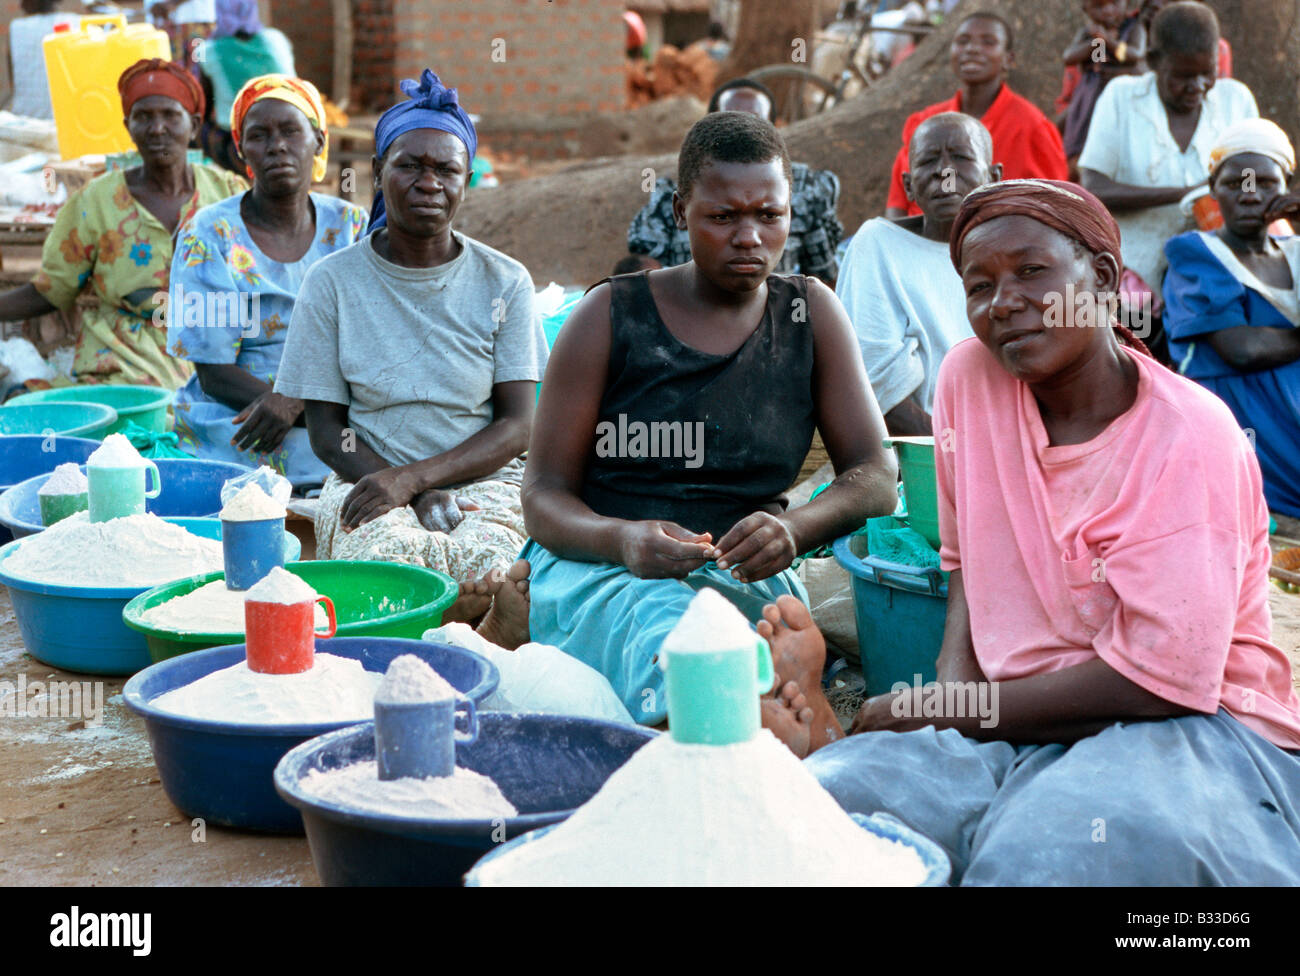 L'Ouganda, Cri, 6.12.2004 : les femmes de vendre de la farine de maïs à un marché au cri Banque D'Images